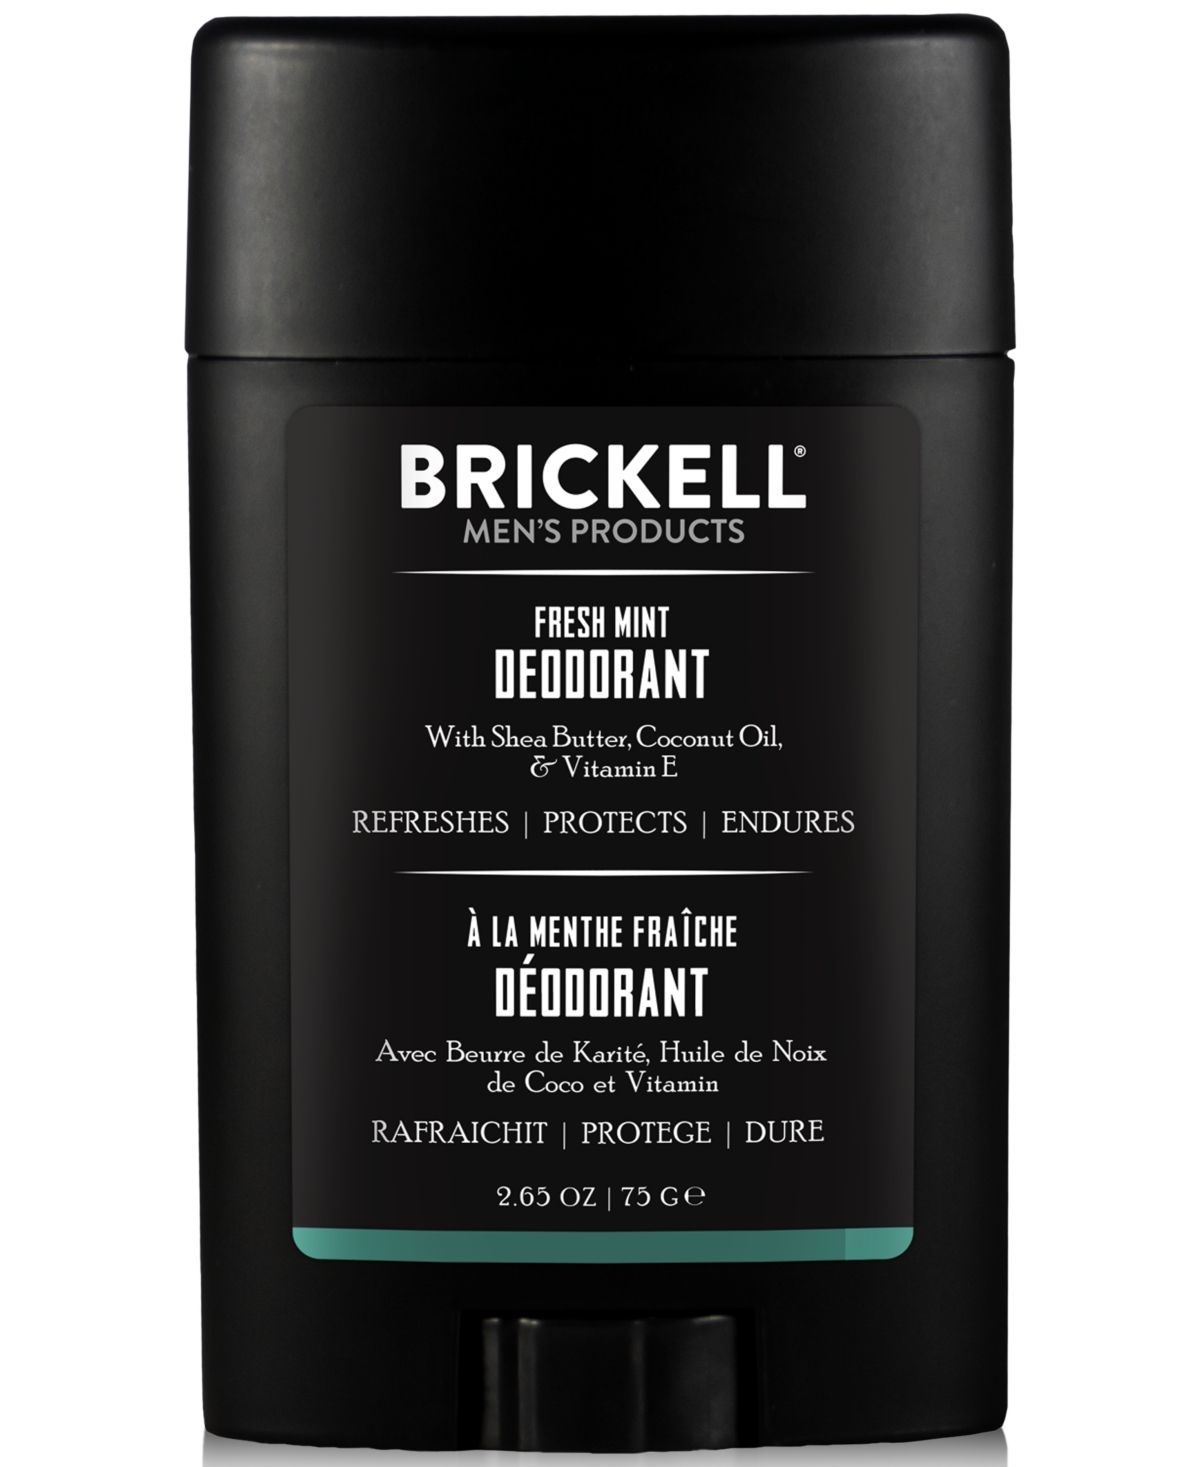 Brickell Mens Products Brickell Men's Products Fresh Mint Deodorant, 2.65 Oz.